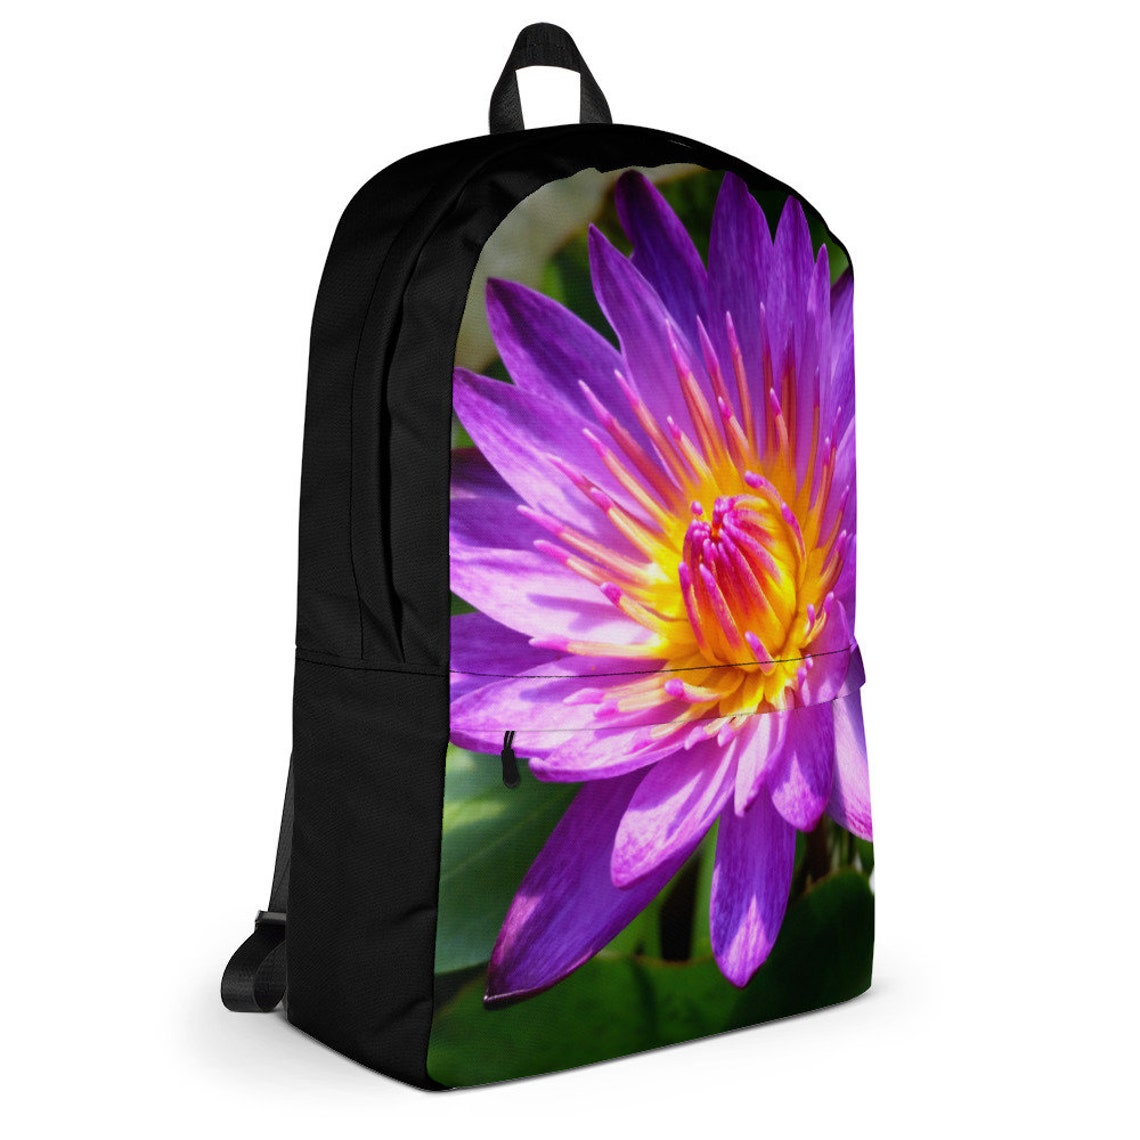 WATER LILY BACKPACK Flower School Bag Laptop Book Backpack | Etsy